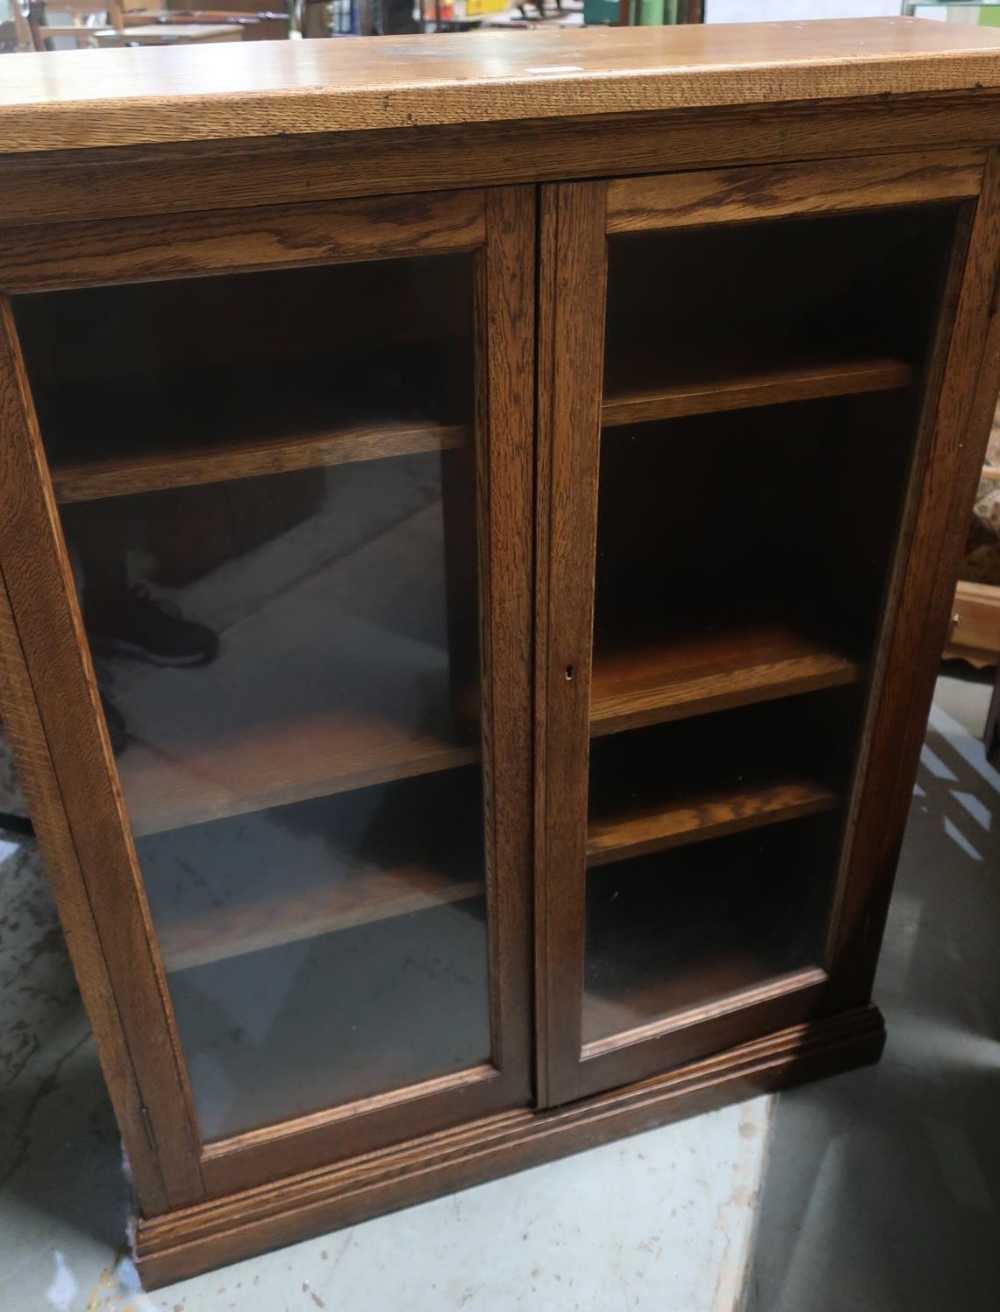 20th Century Oak bookcase, adjustable shelves, enclosed with glazed doors, plinth base (7cm x